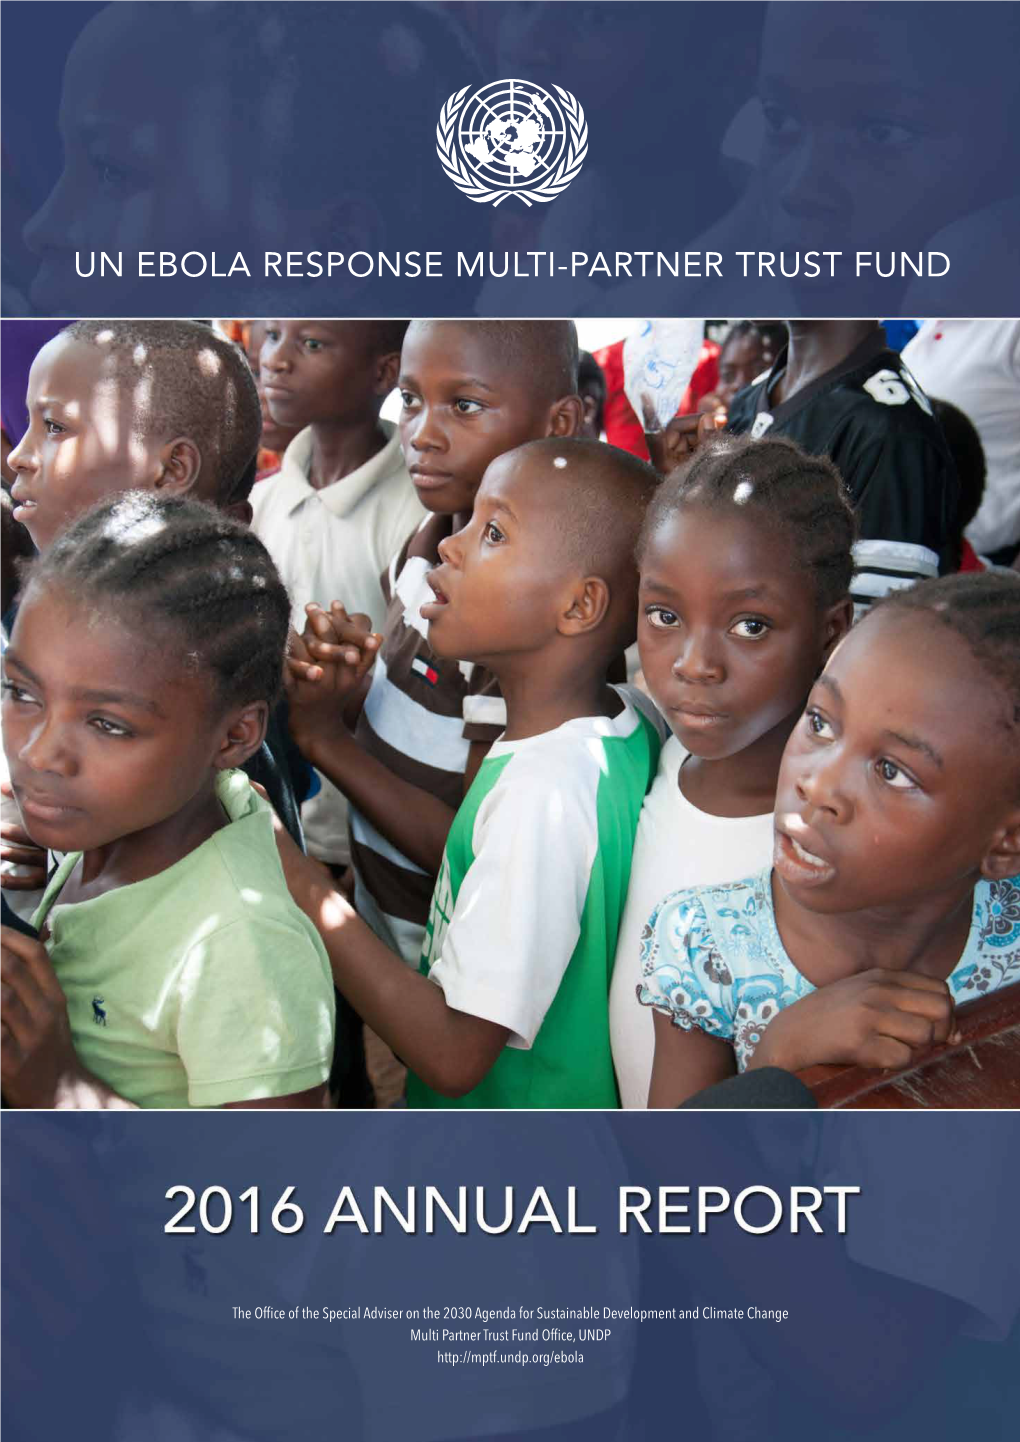 UN EBOLA RESPONSE Multi-Partner Trust Fund